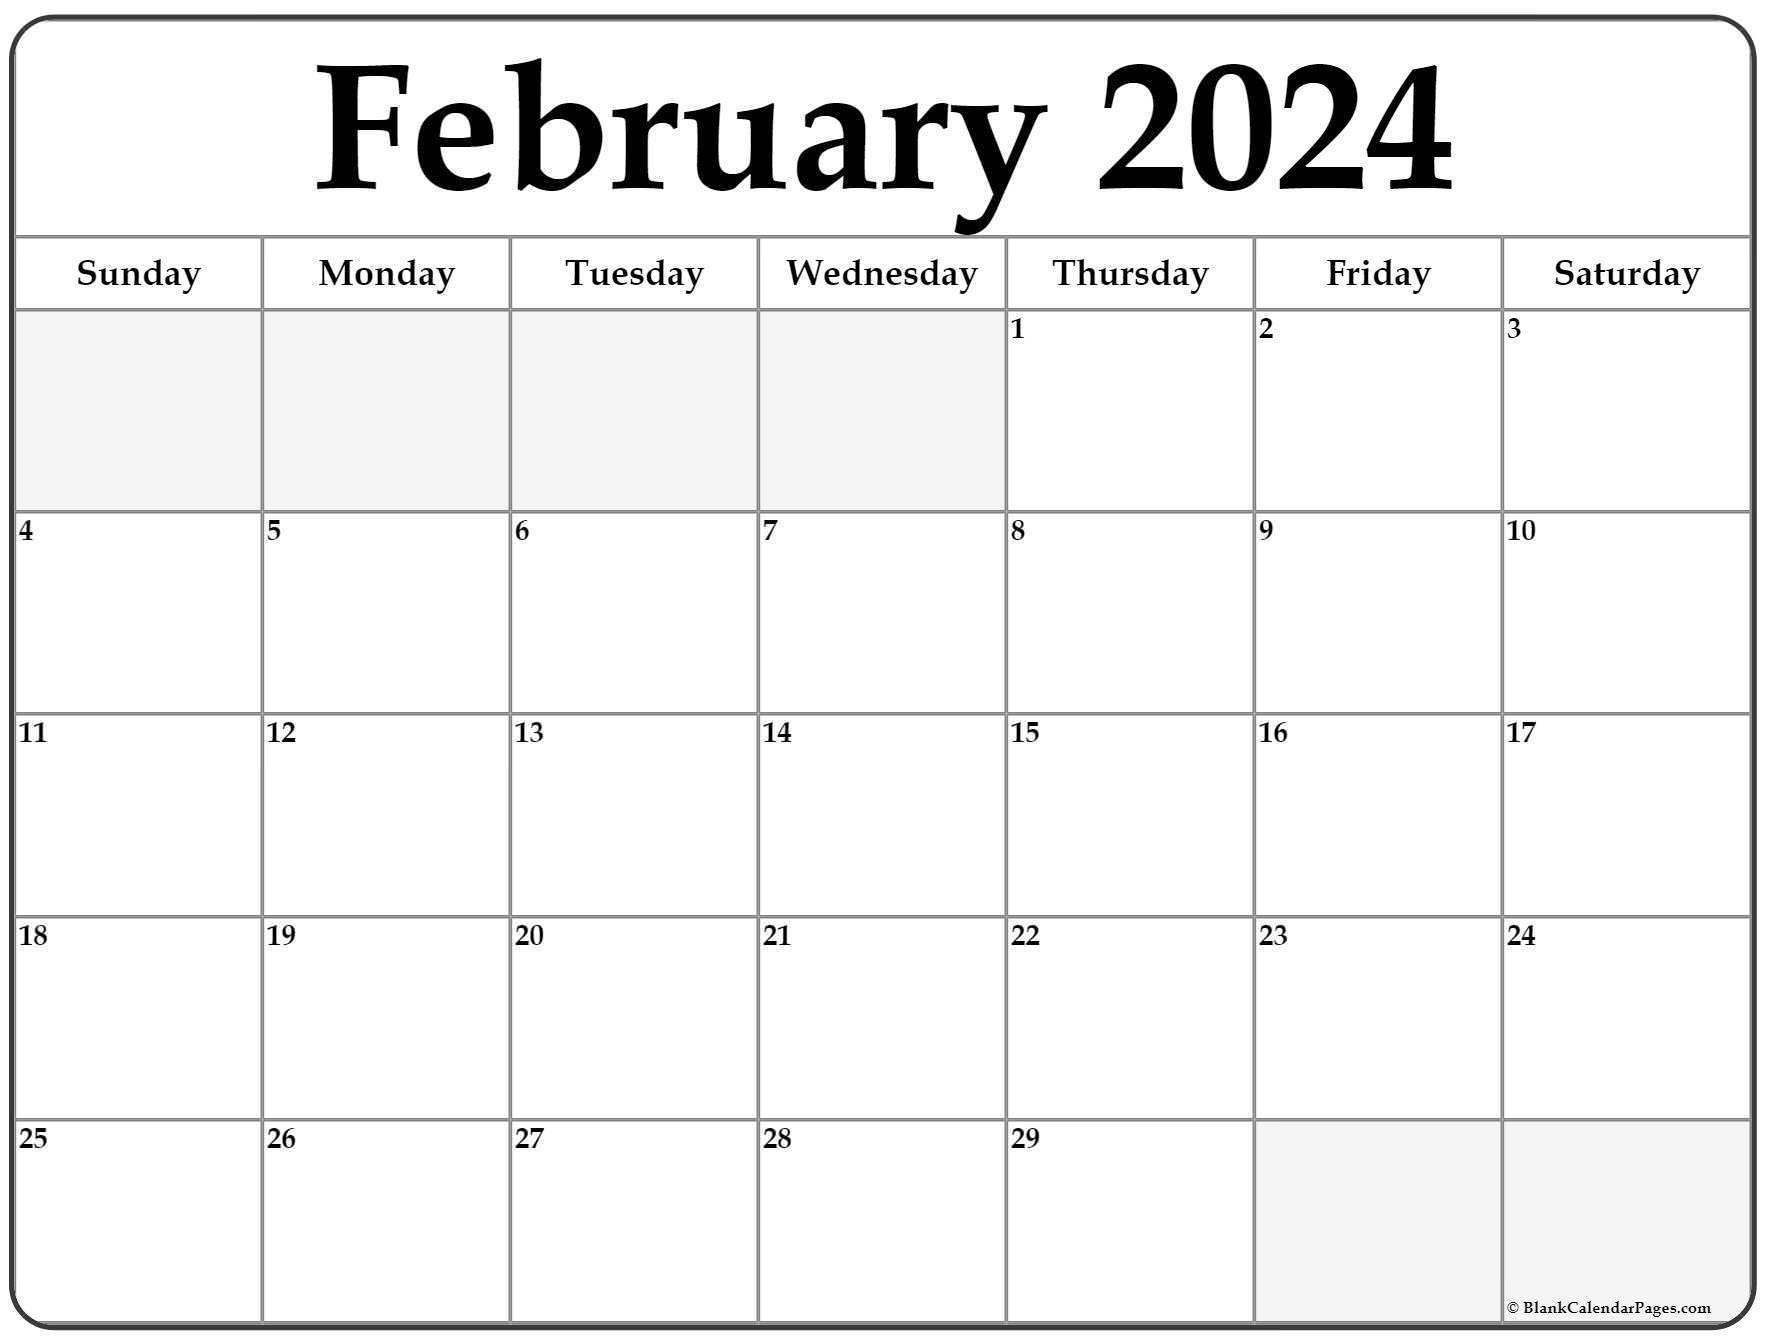 February Blank Calendar 2022 February 2022 Calendar | Free Printable Calendar Templates